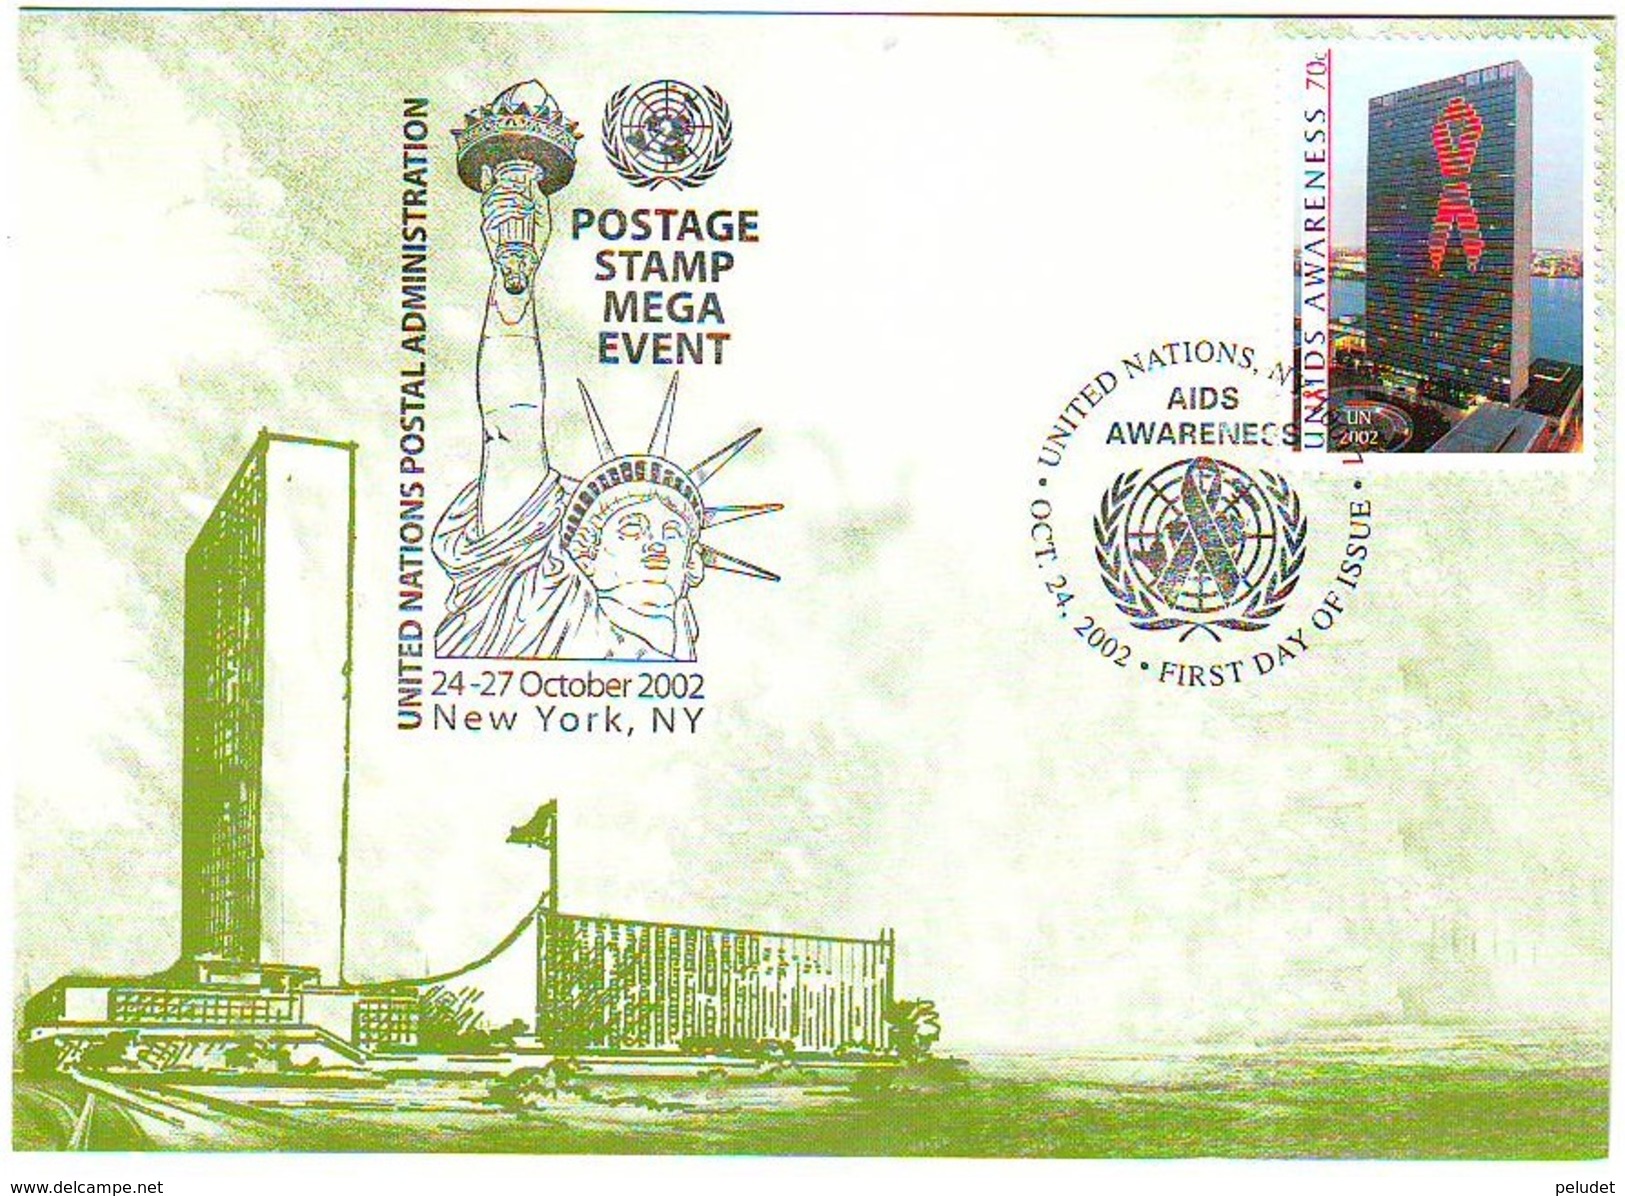 U.N. - UNITED NATIONS POSTAL ADMINISTRATION - NEW YORK - POSTAGE STAMP MEGA EVENT 2002 - SPECIAL CANCEL - Maximumkaarten